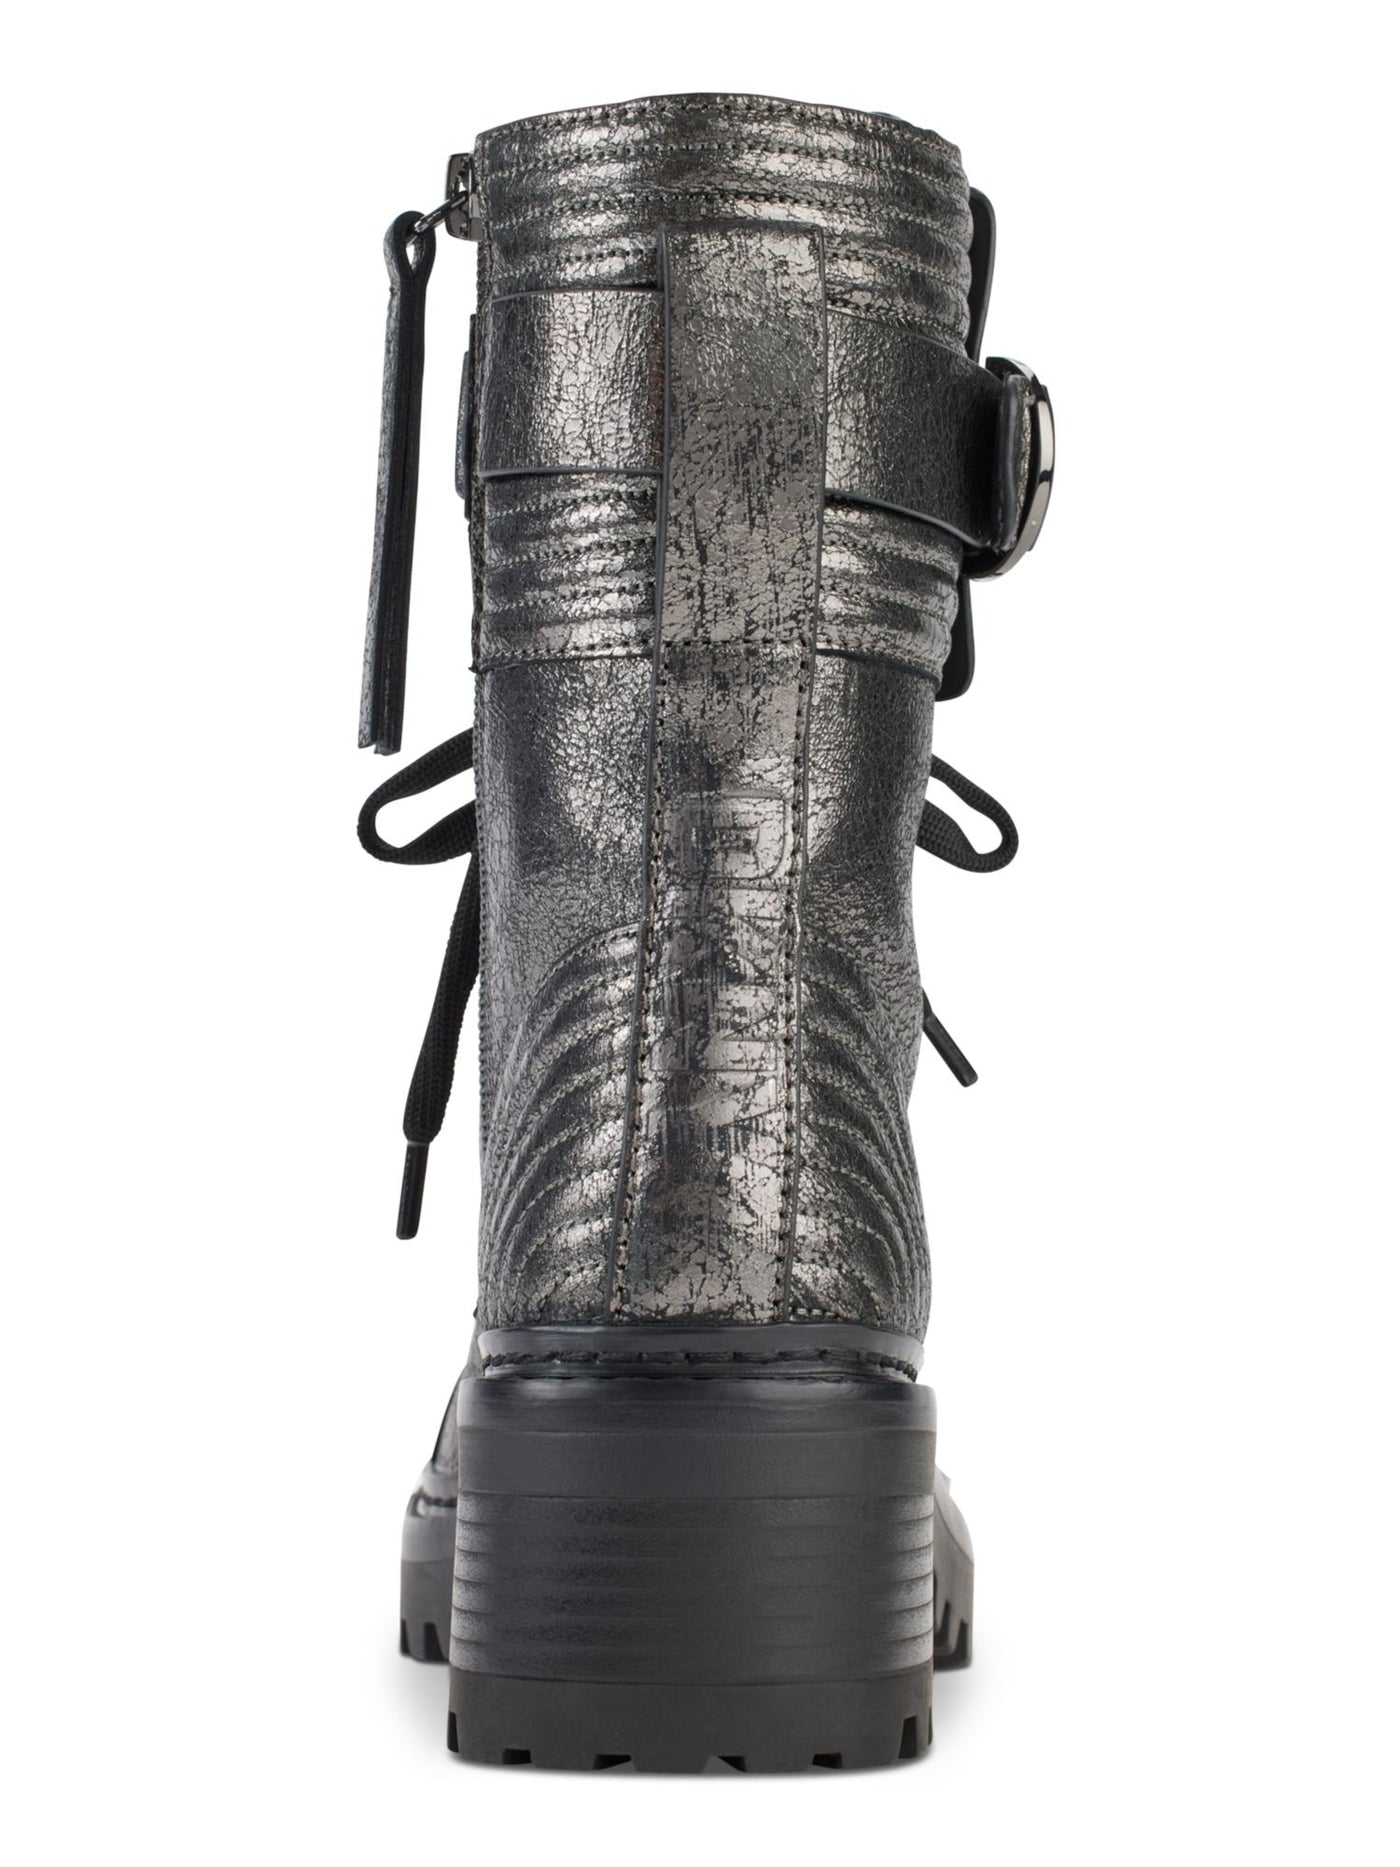 DKNY Womens Gray Buckle Accent Metallic Basia Round Toe Block Heel Zip-Up Leather Combat Boots 9 M